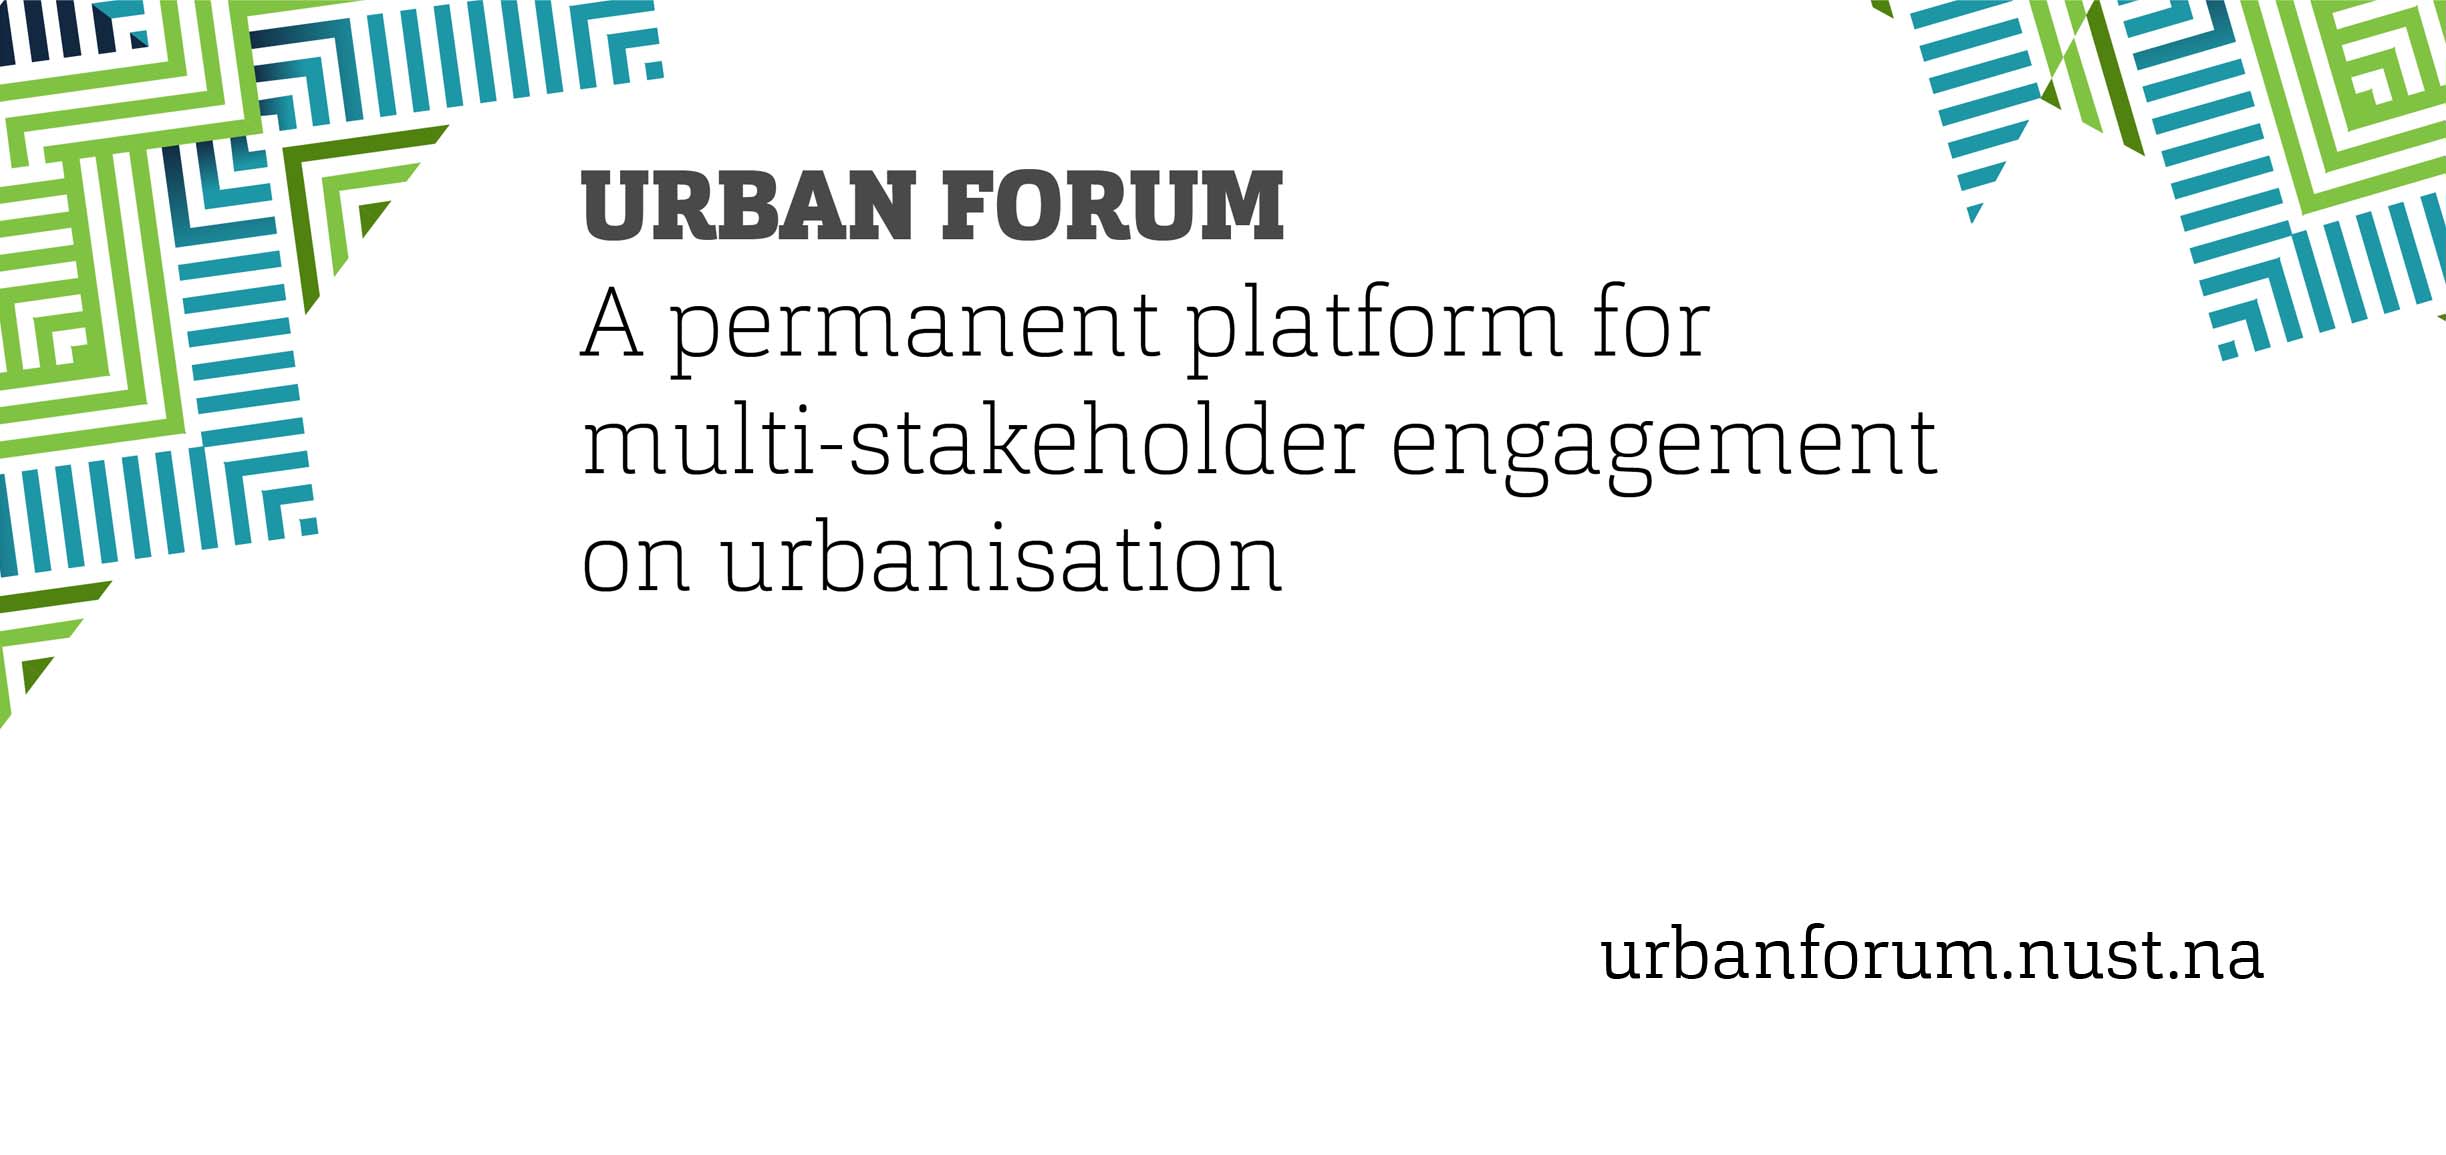 Urban Forum